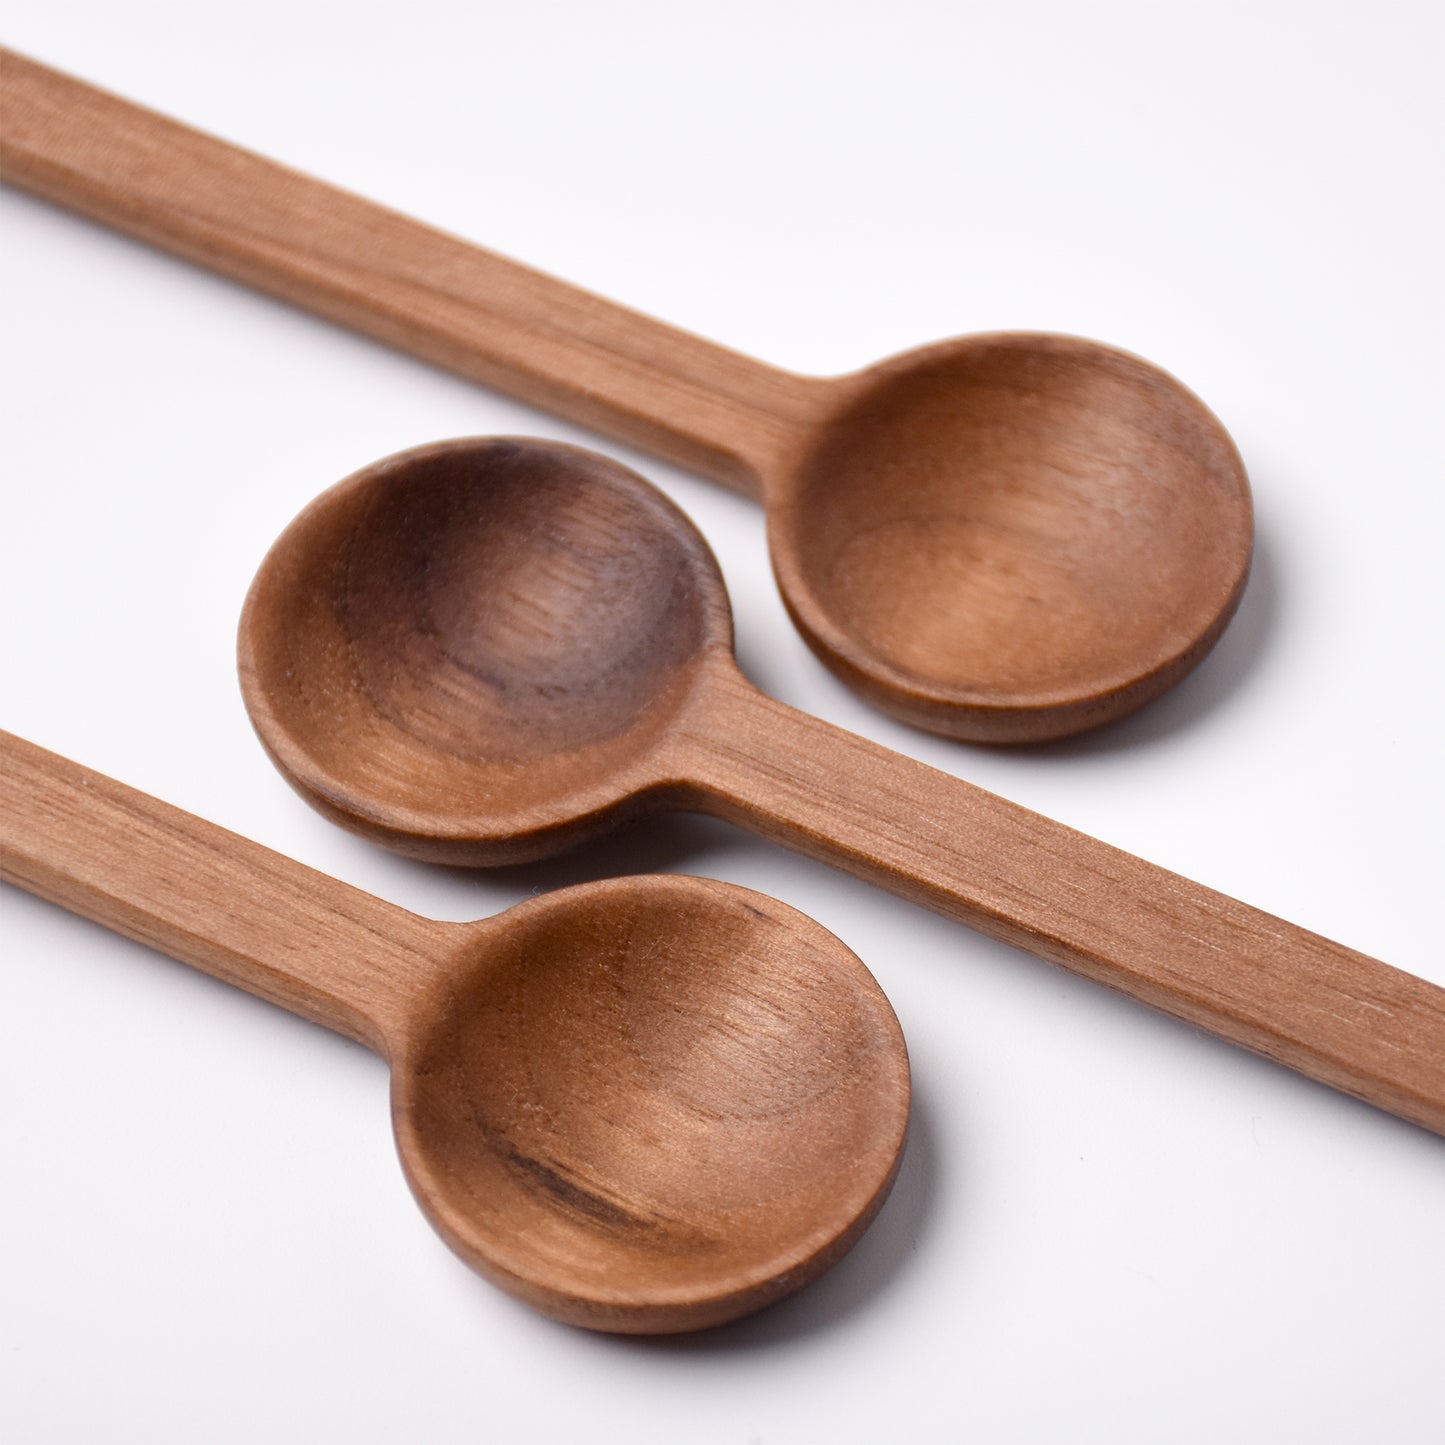 Freakishly Long Wooden Spoon